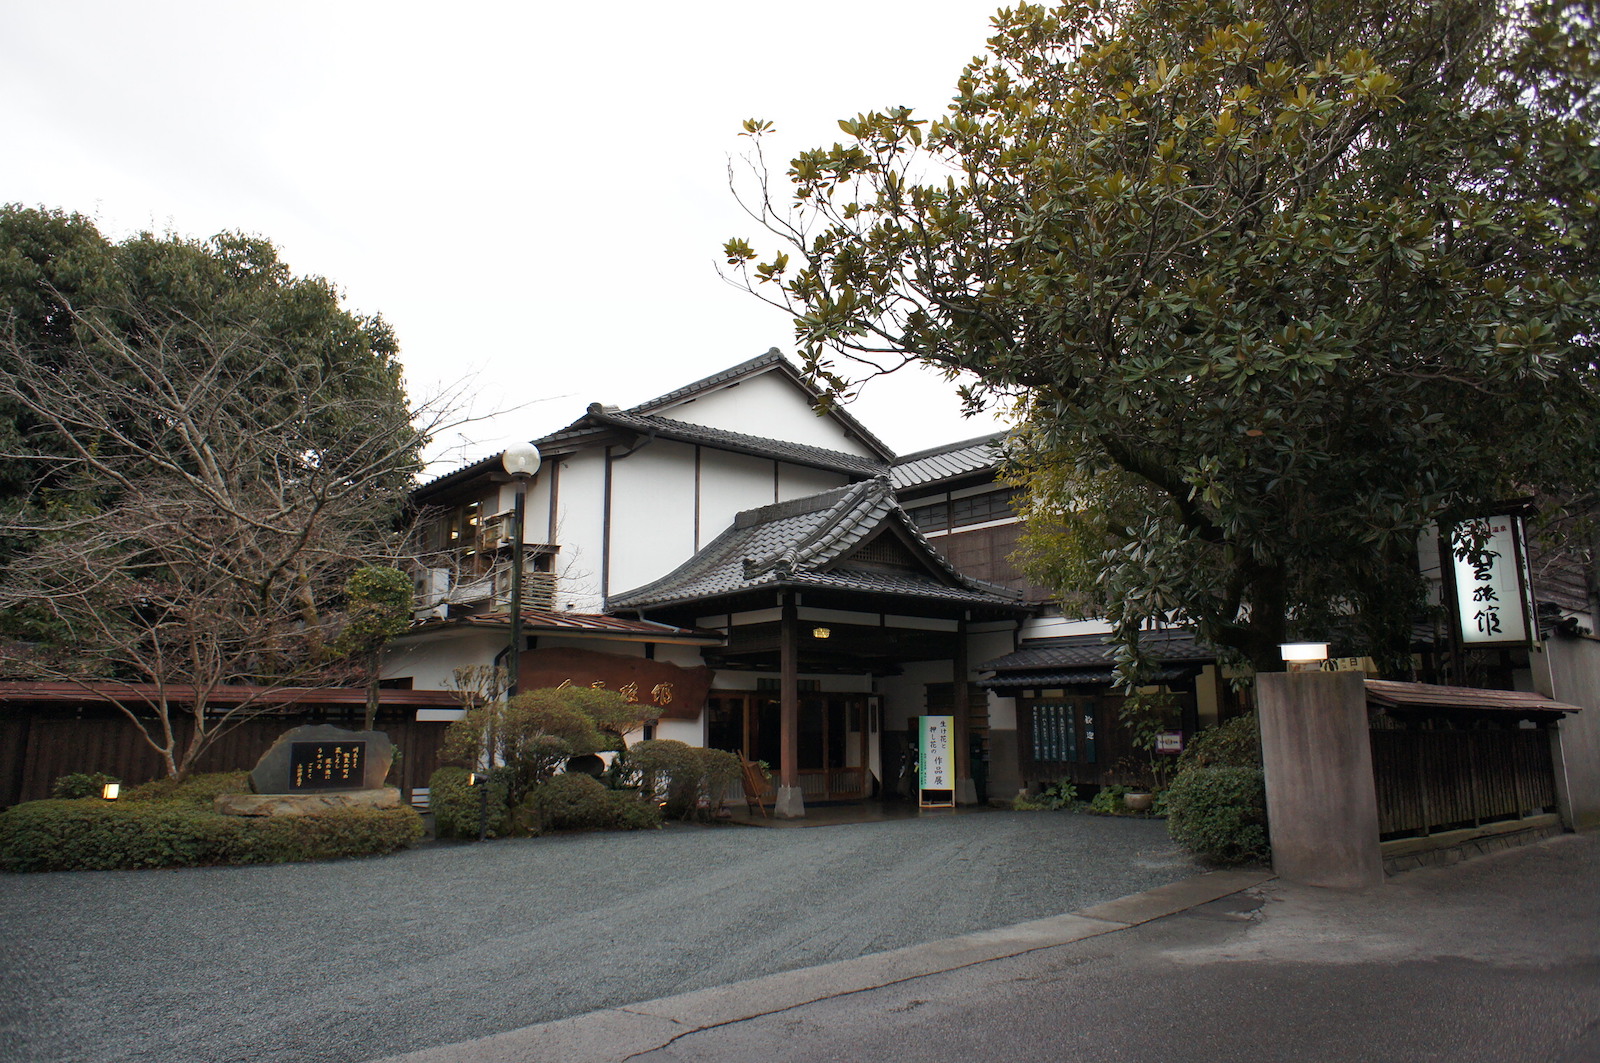 Hitoyoshi Ryokan front entrance before the flood.